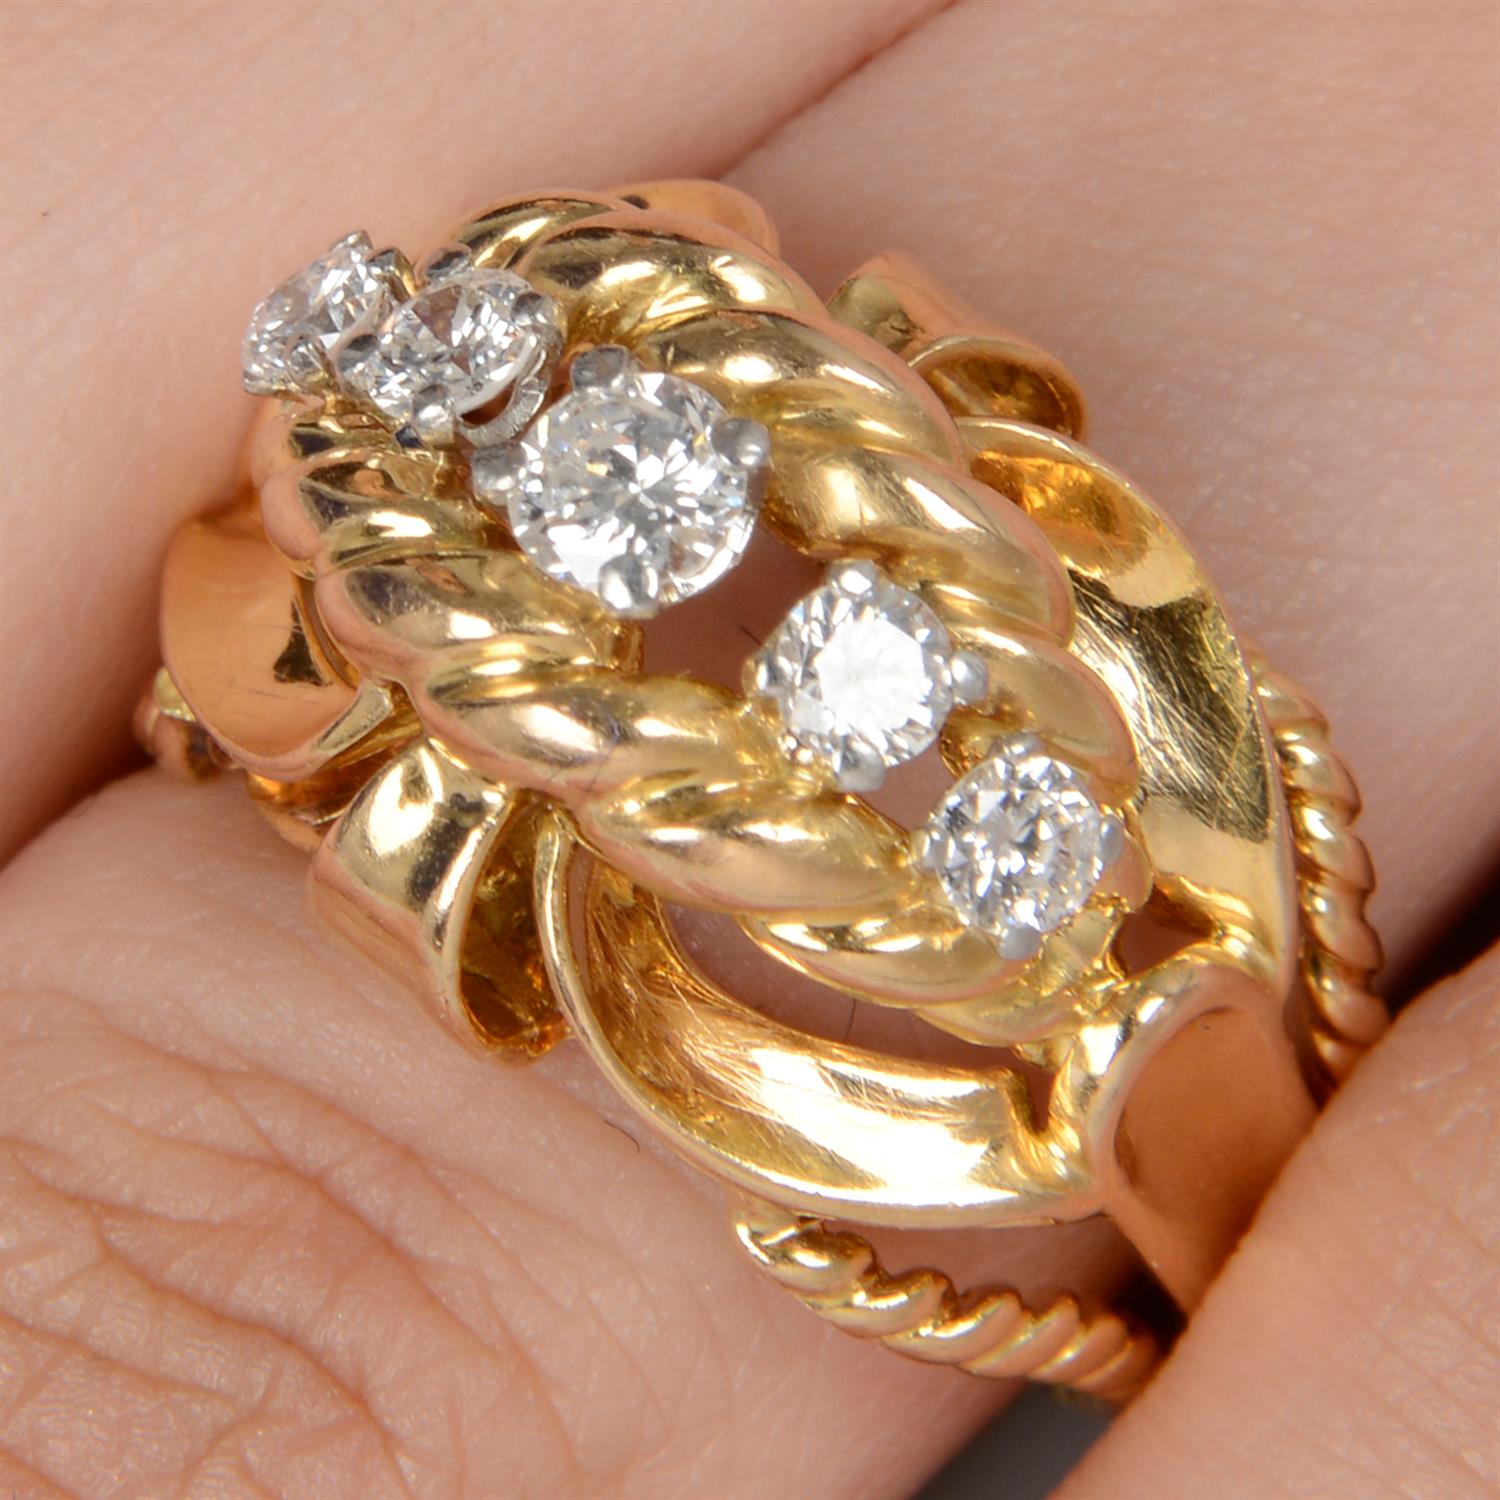 Mid 20th century platinum and gold diamond ring